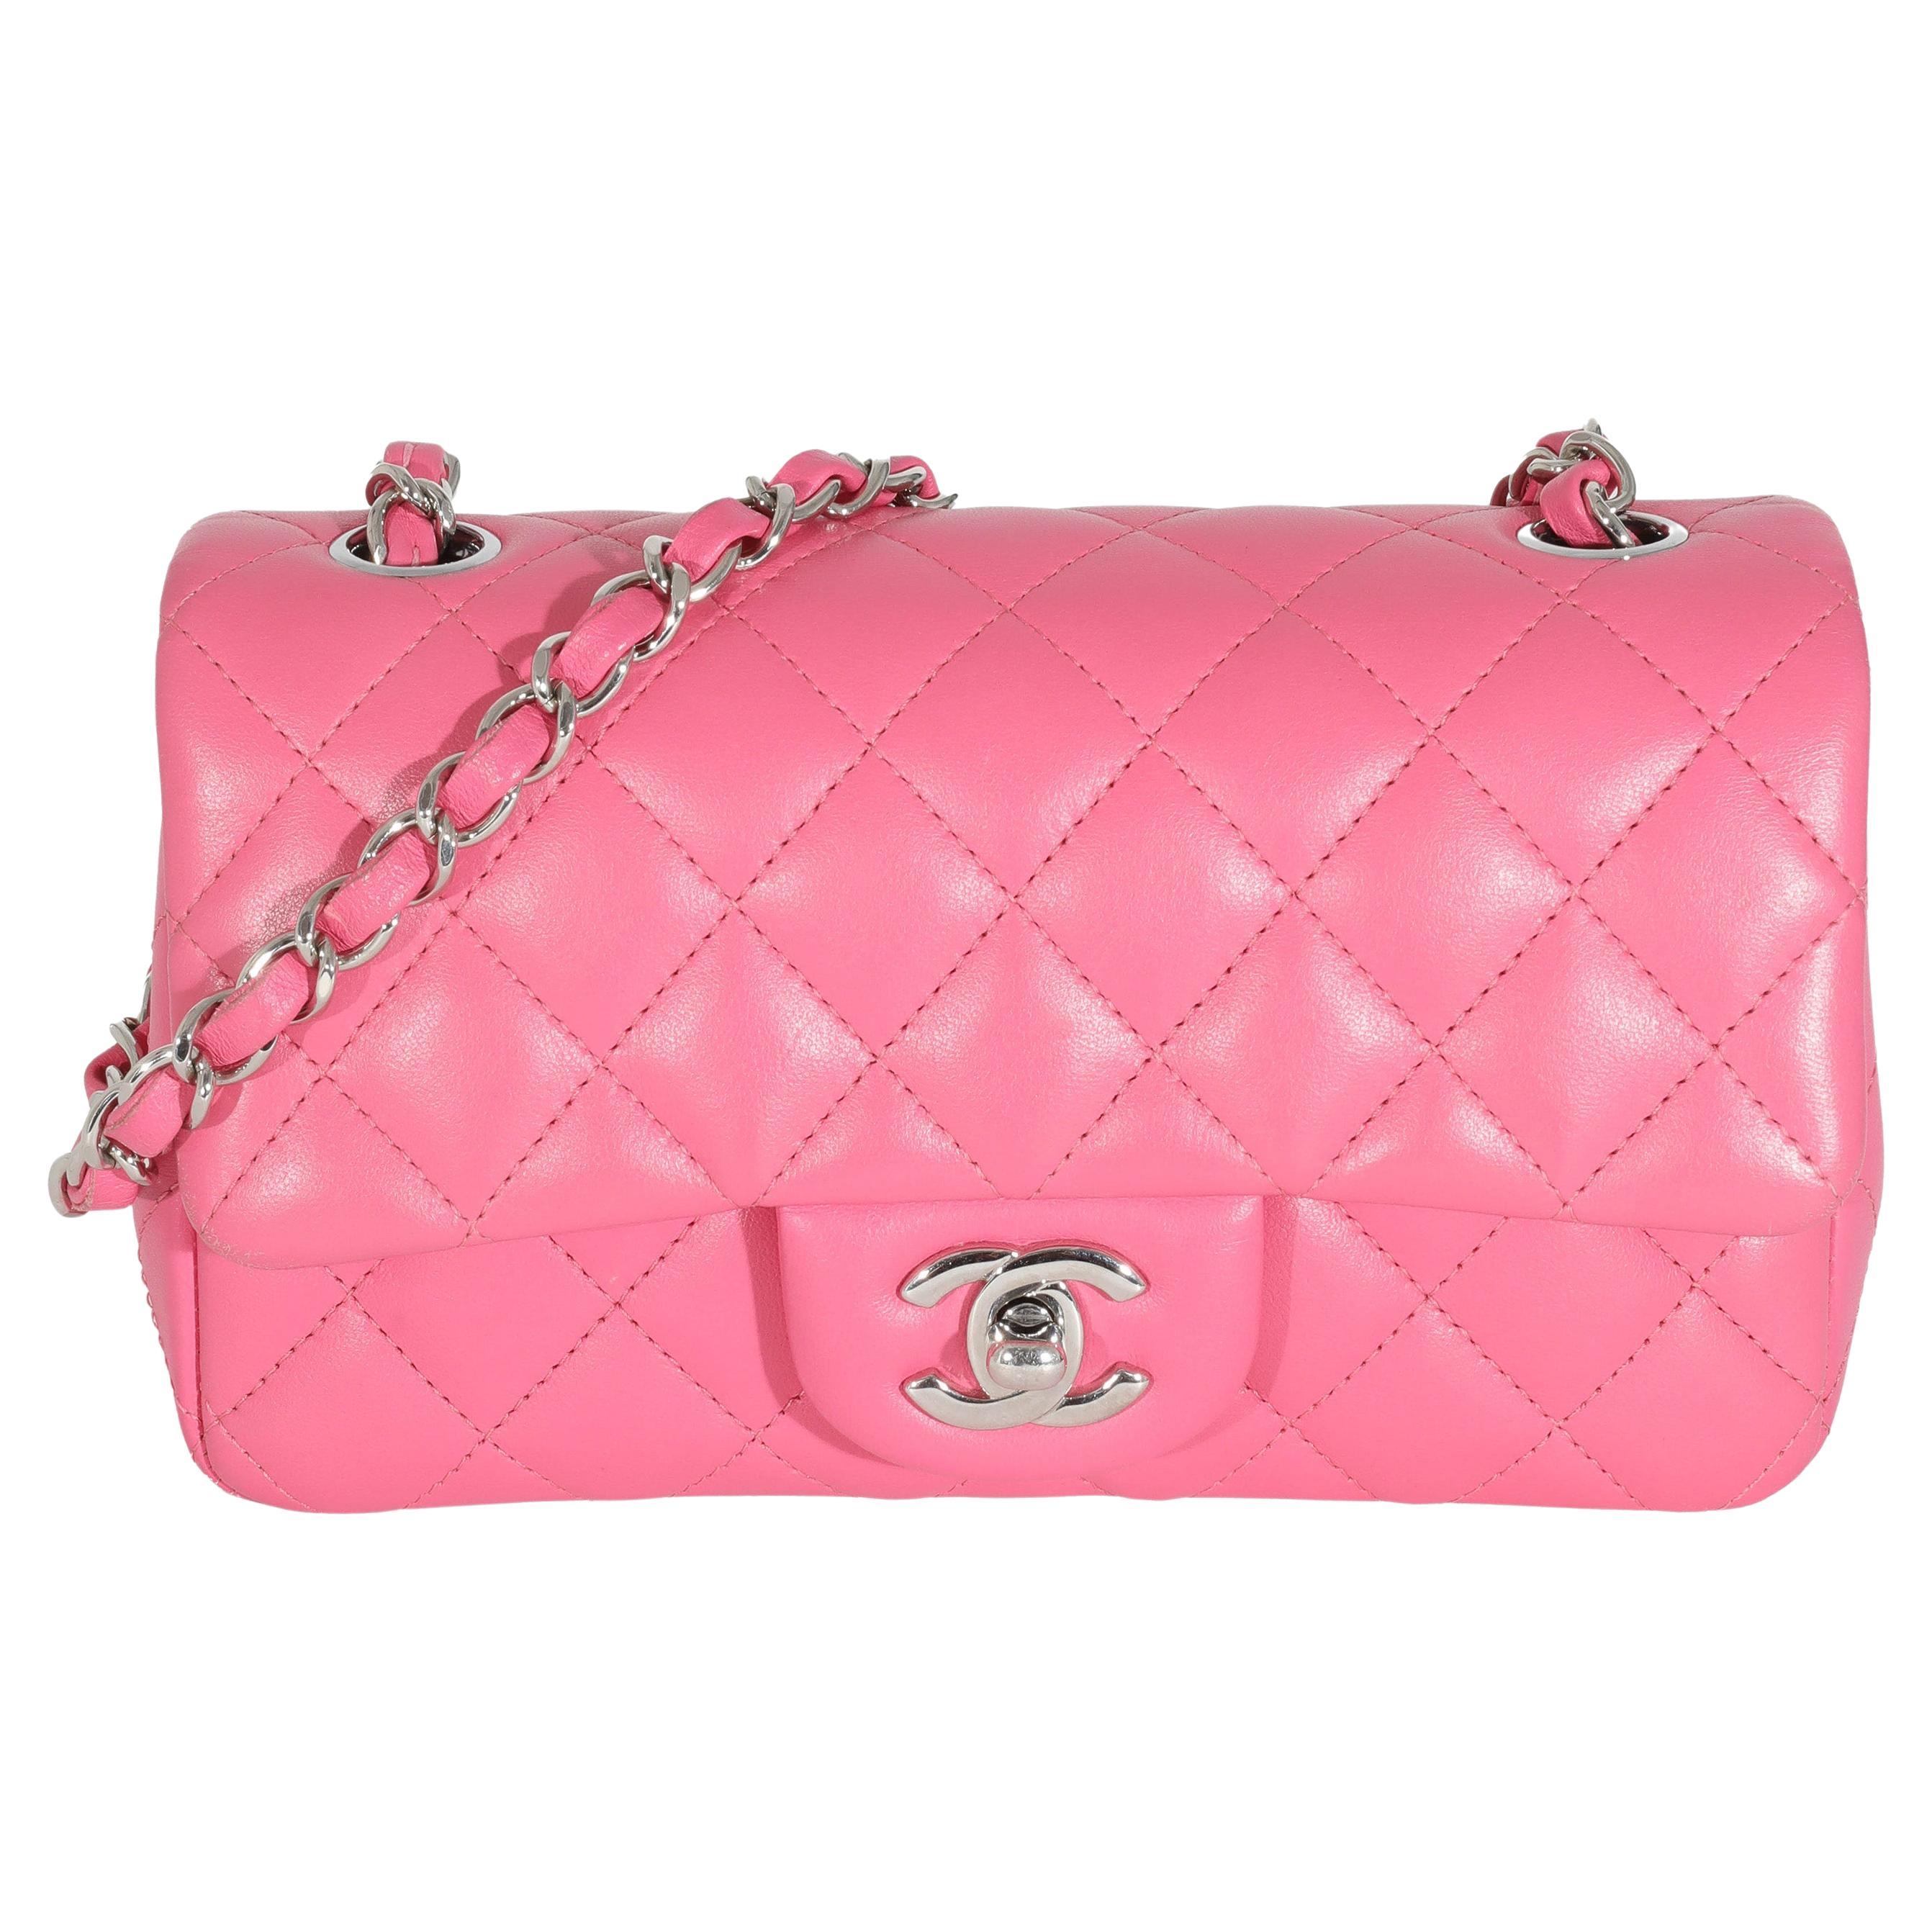 Chanel Mini Flap Bag Pink - 57 For Sale on 1stDibs